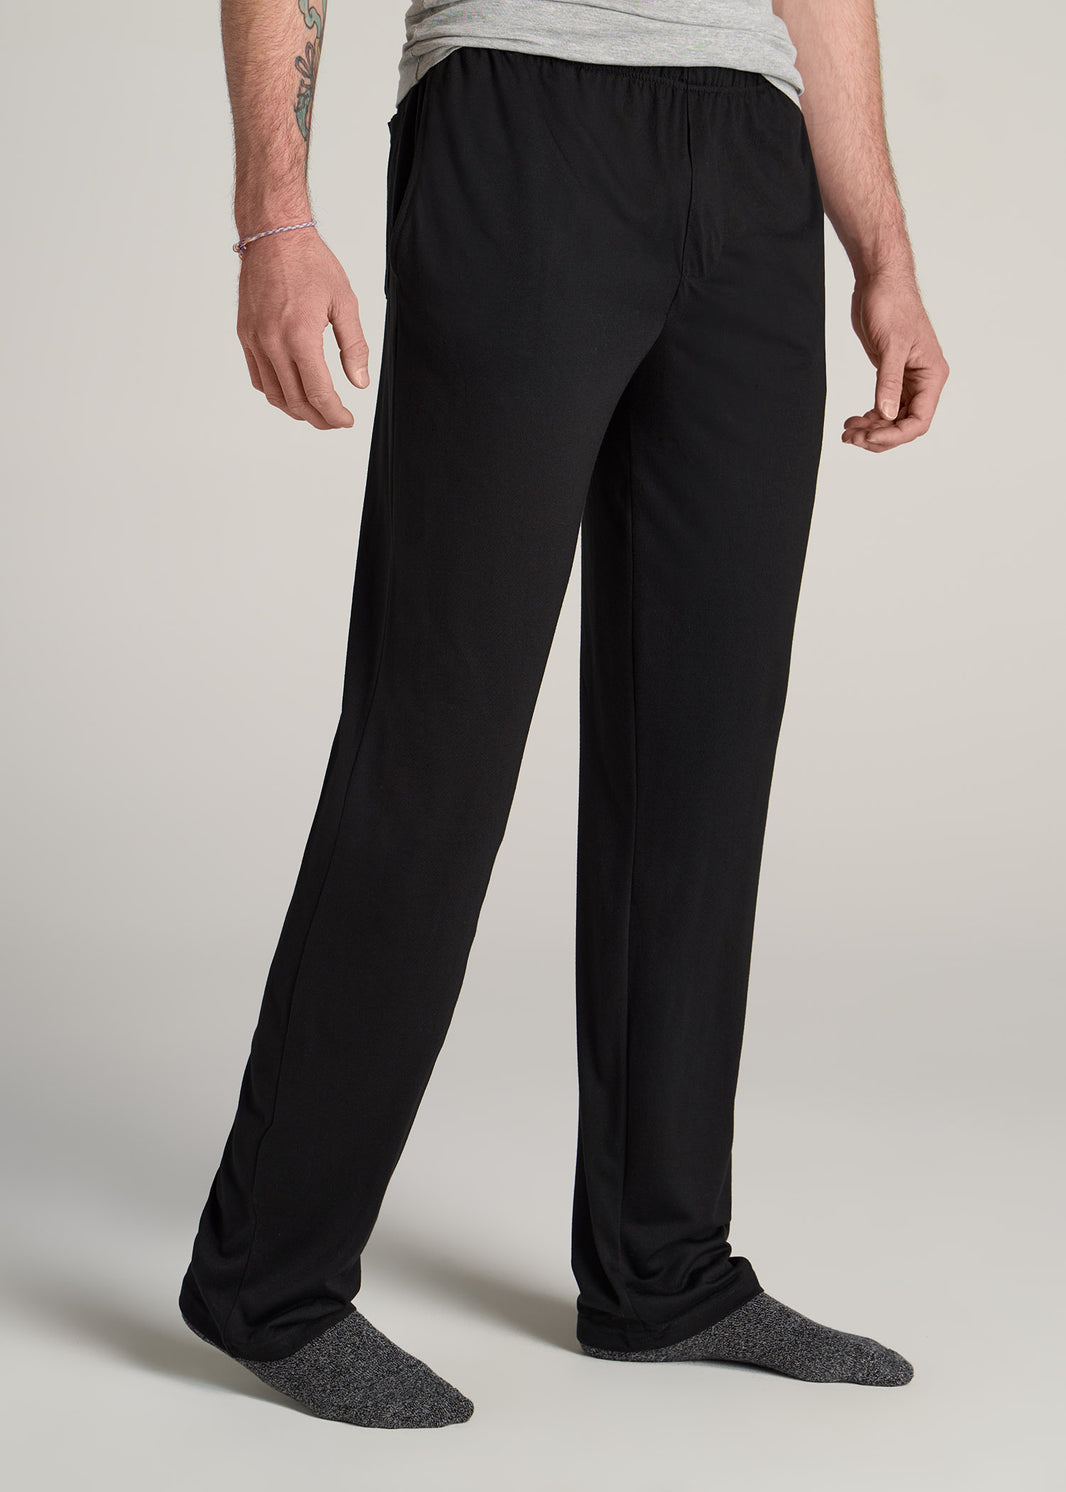 Men's Tall Pajama Pants & Lounge Pants | American Tall